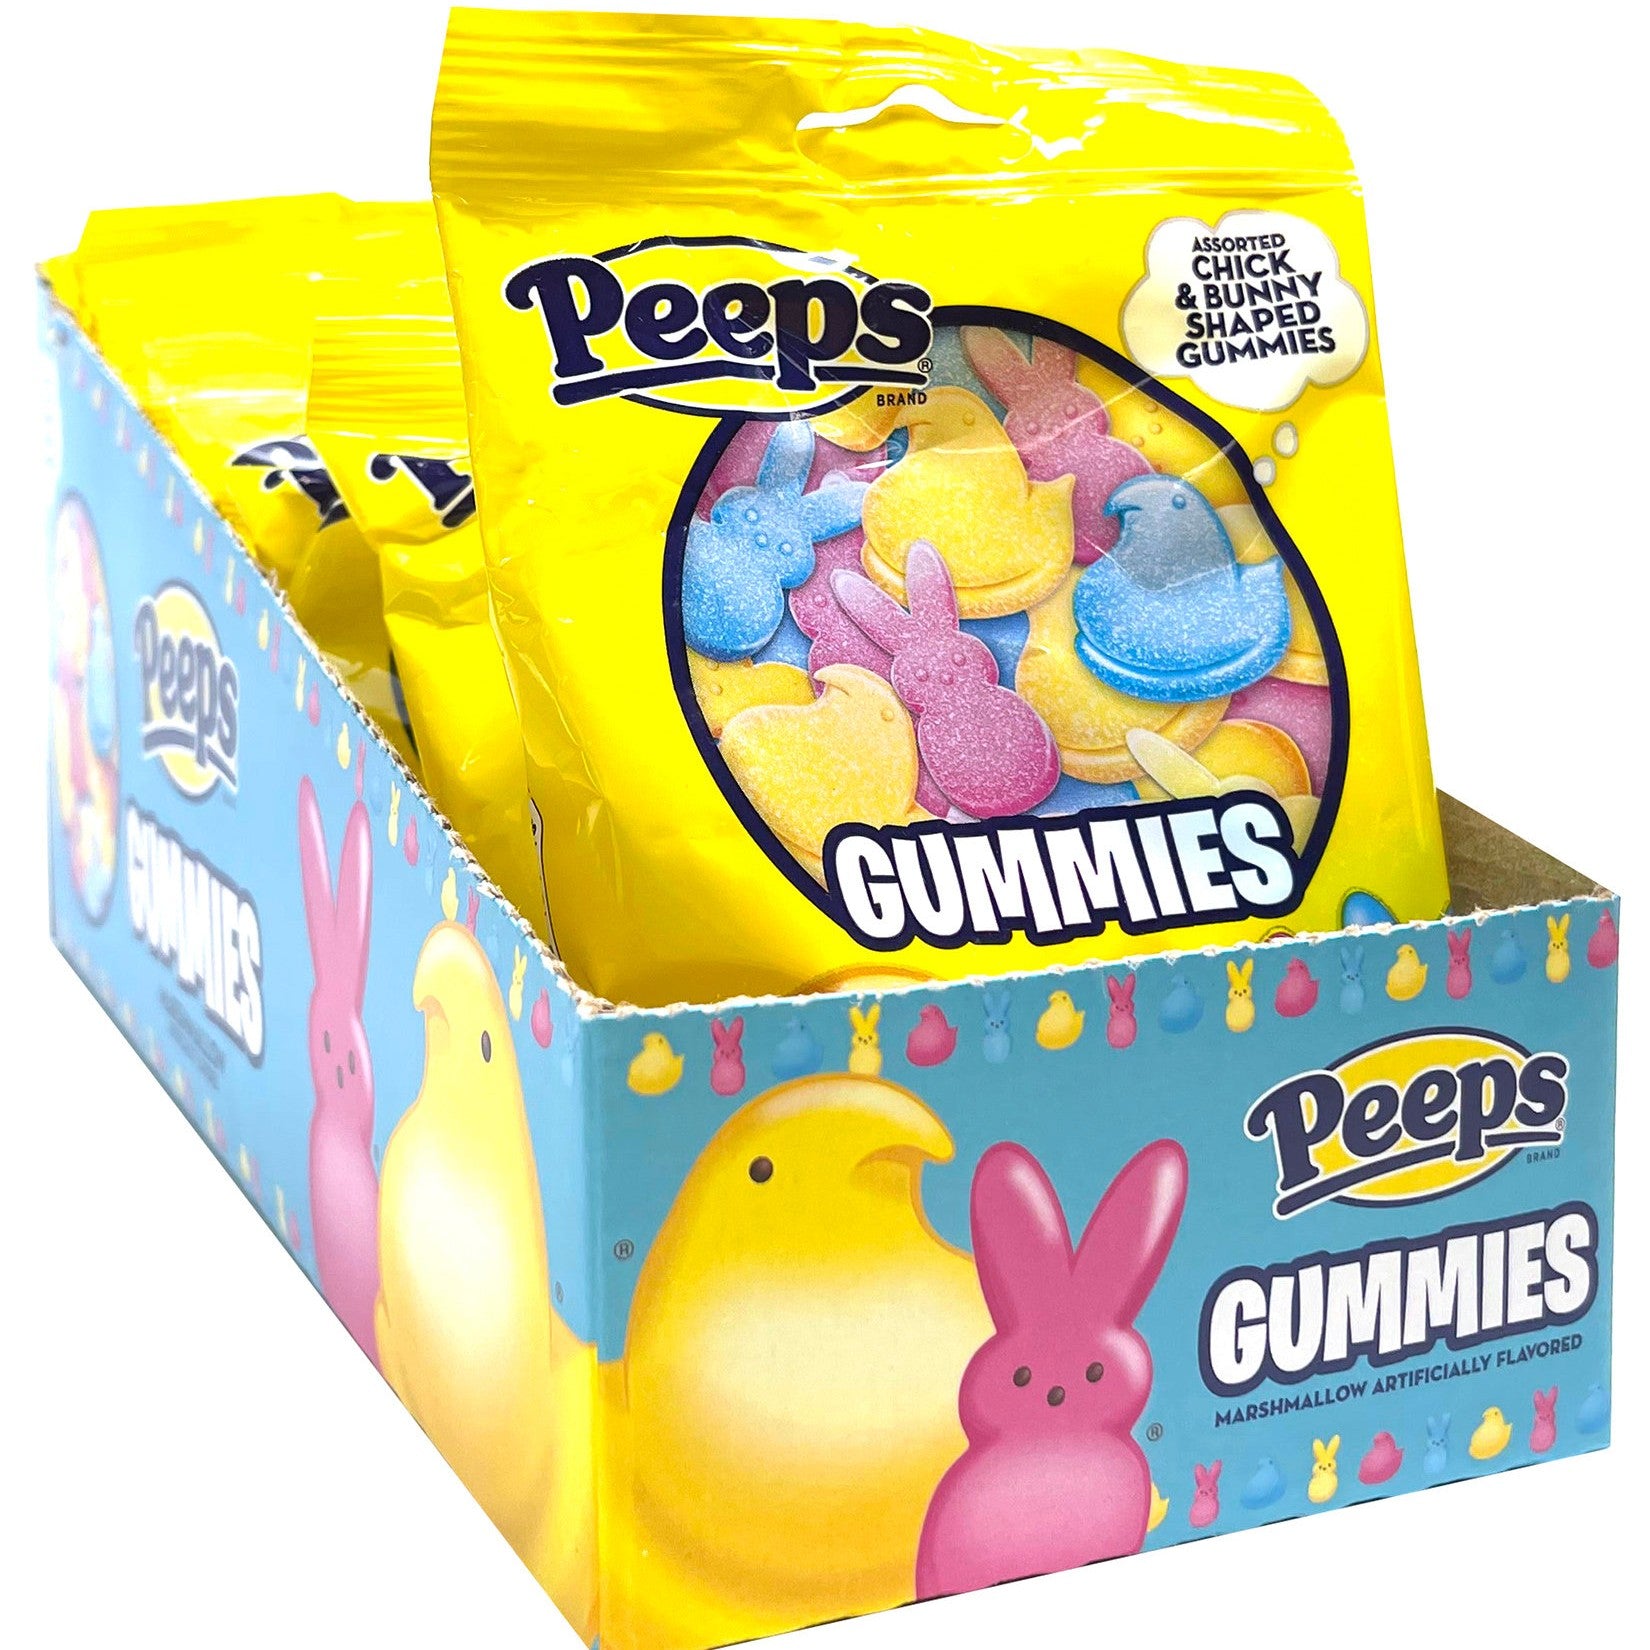 Homemade Gummy Bunnies! - Inspired Edibles